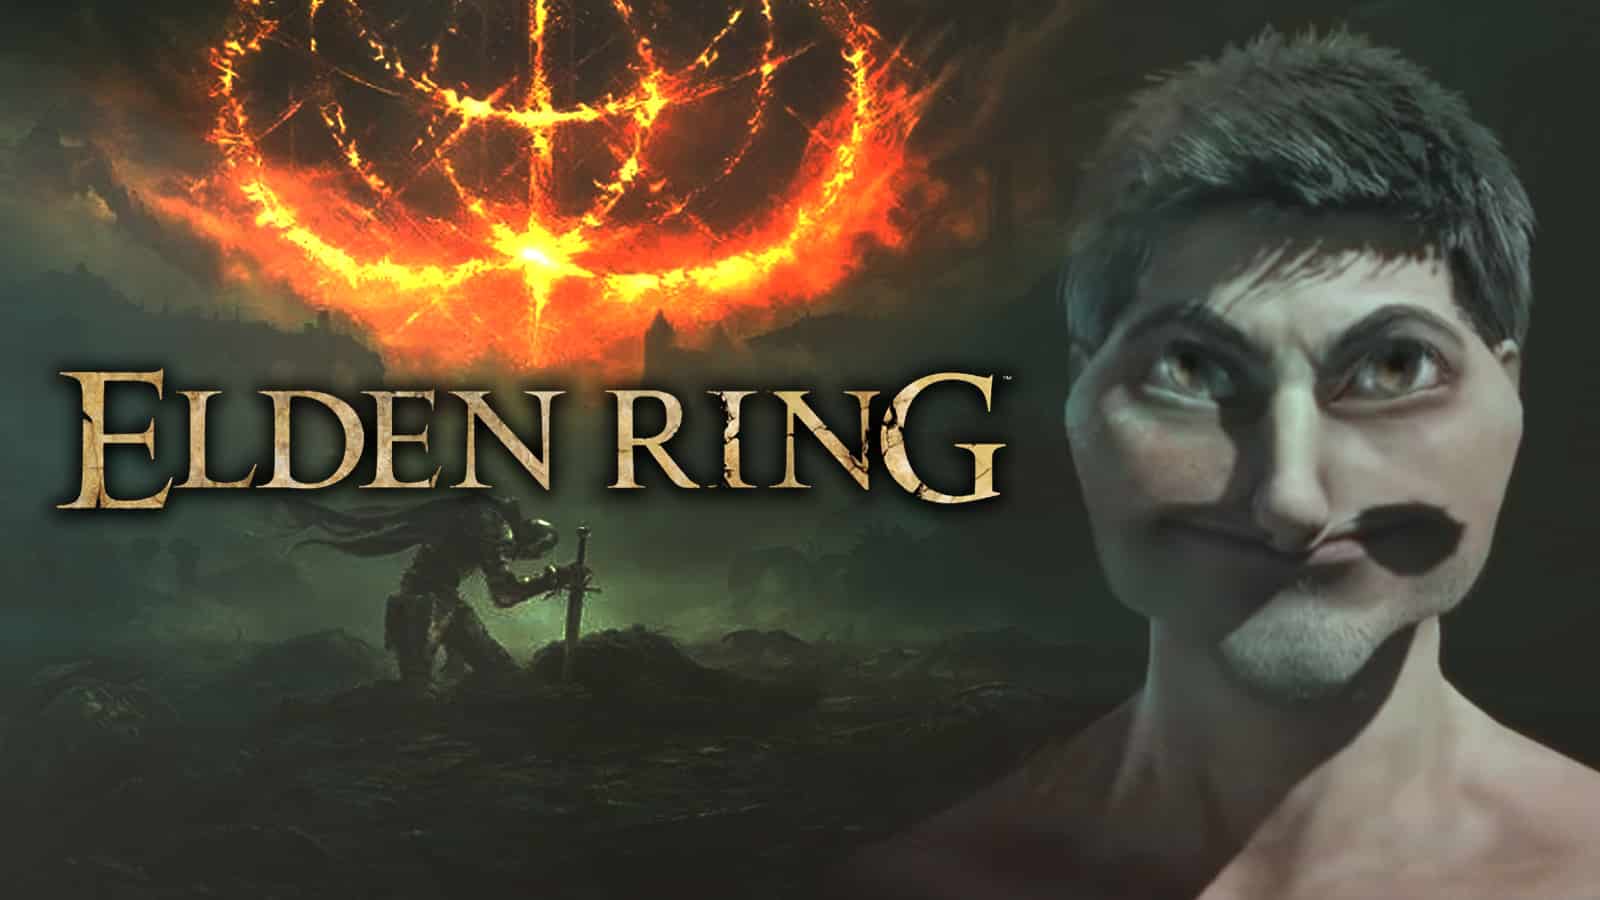 An image of Elden Ring's